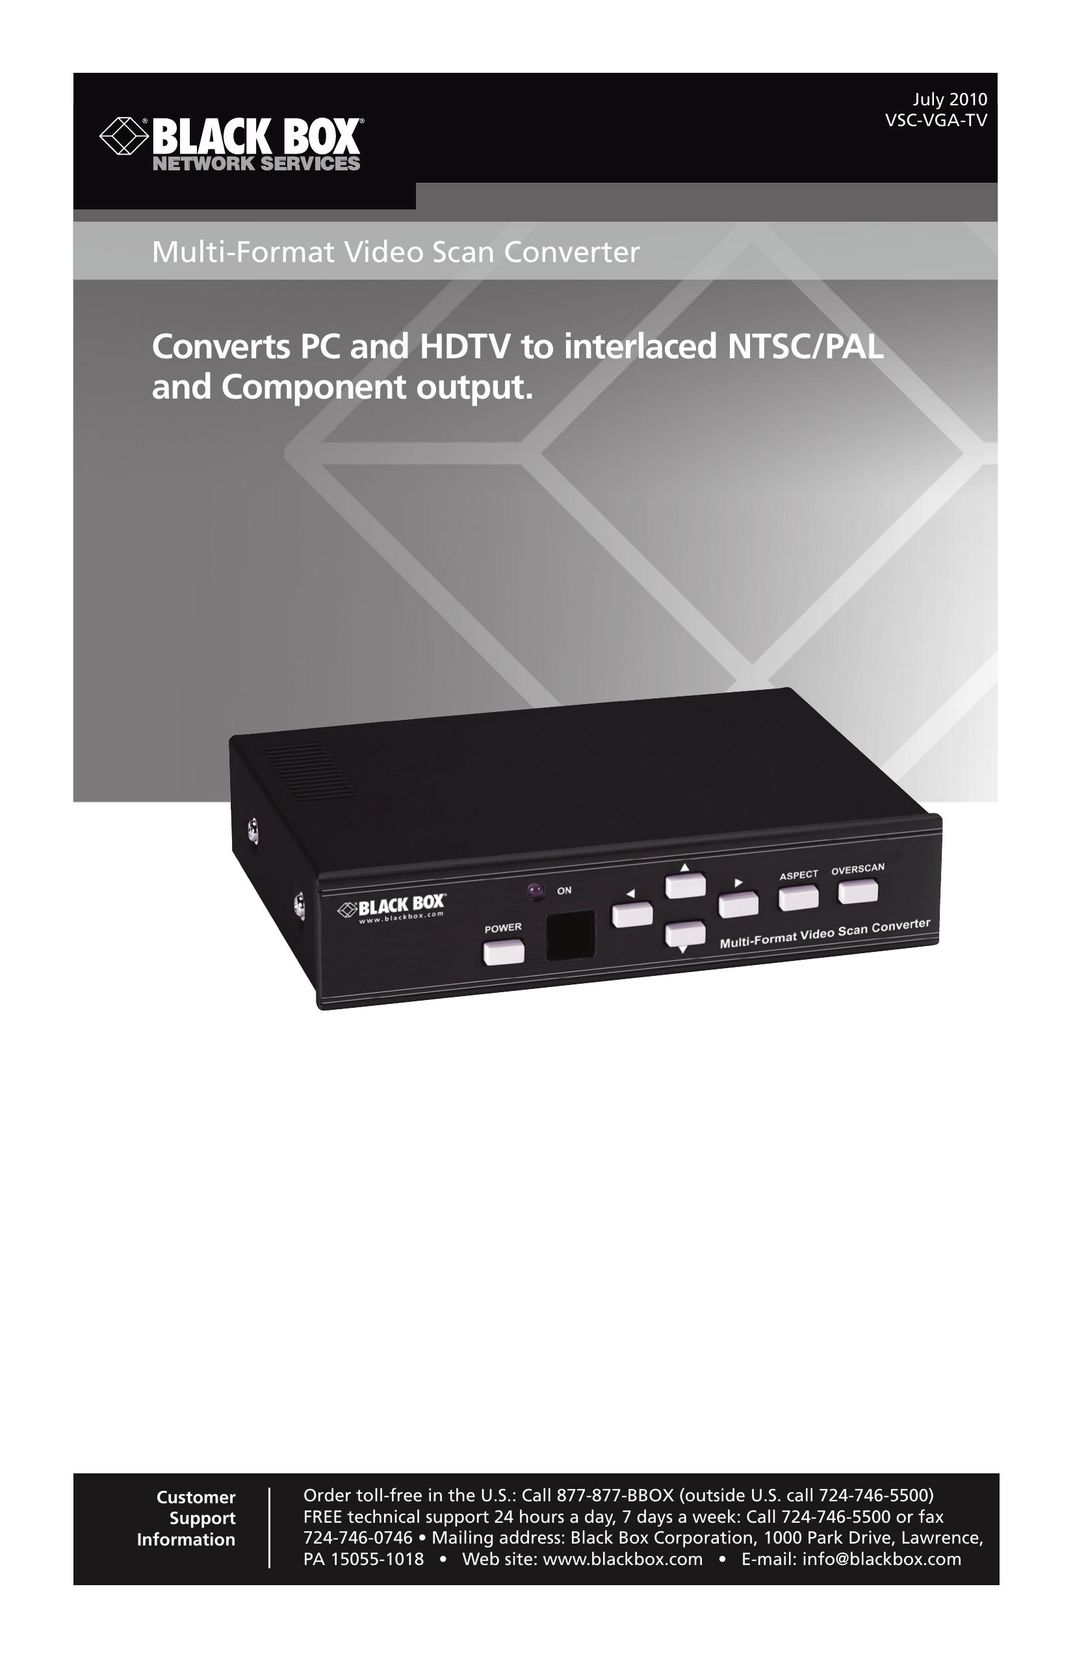 Black Box Multi-Format Video Scan Converter TV Converter Box User Manual